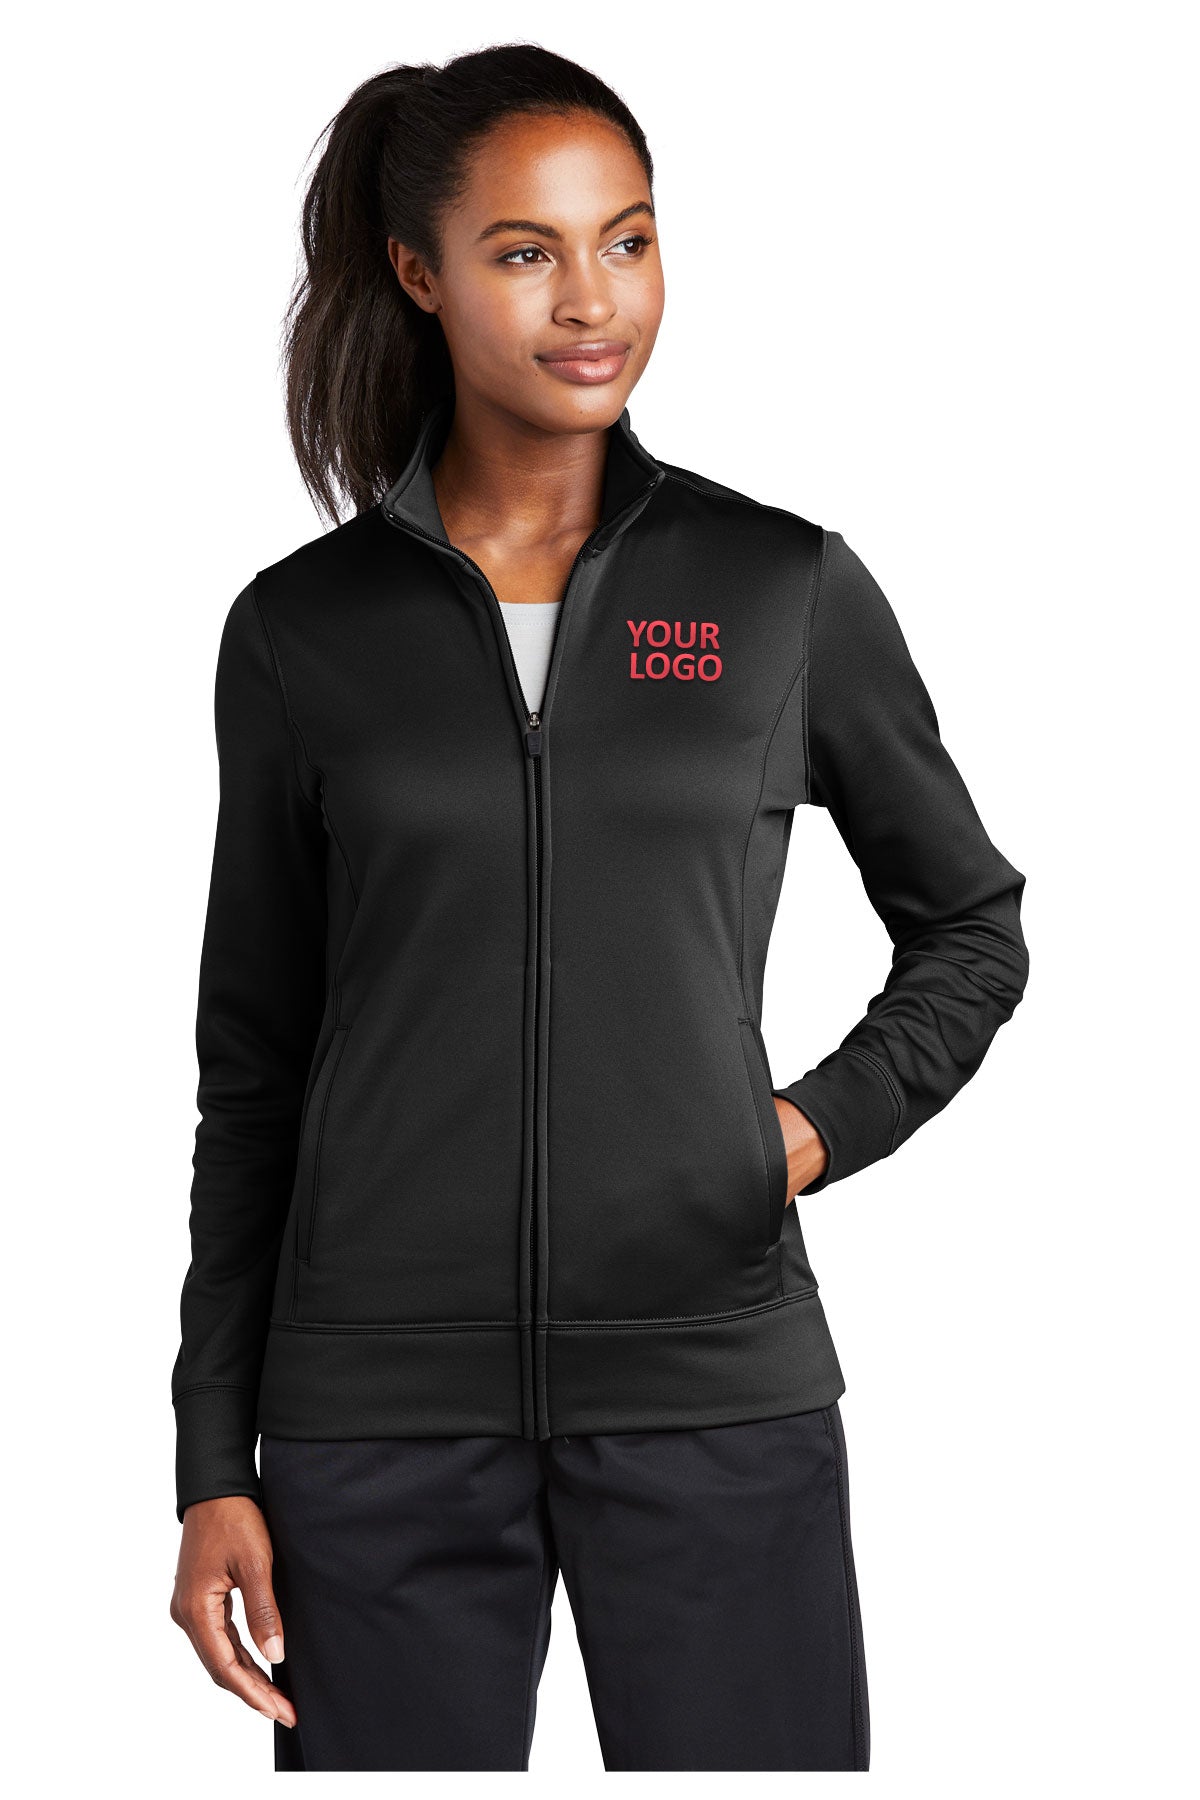 Sport-Tek Ladies Sport-Wick Fleece Branded Full-Zip Jackets, Black